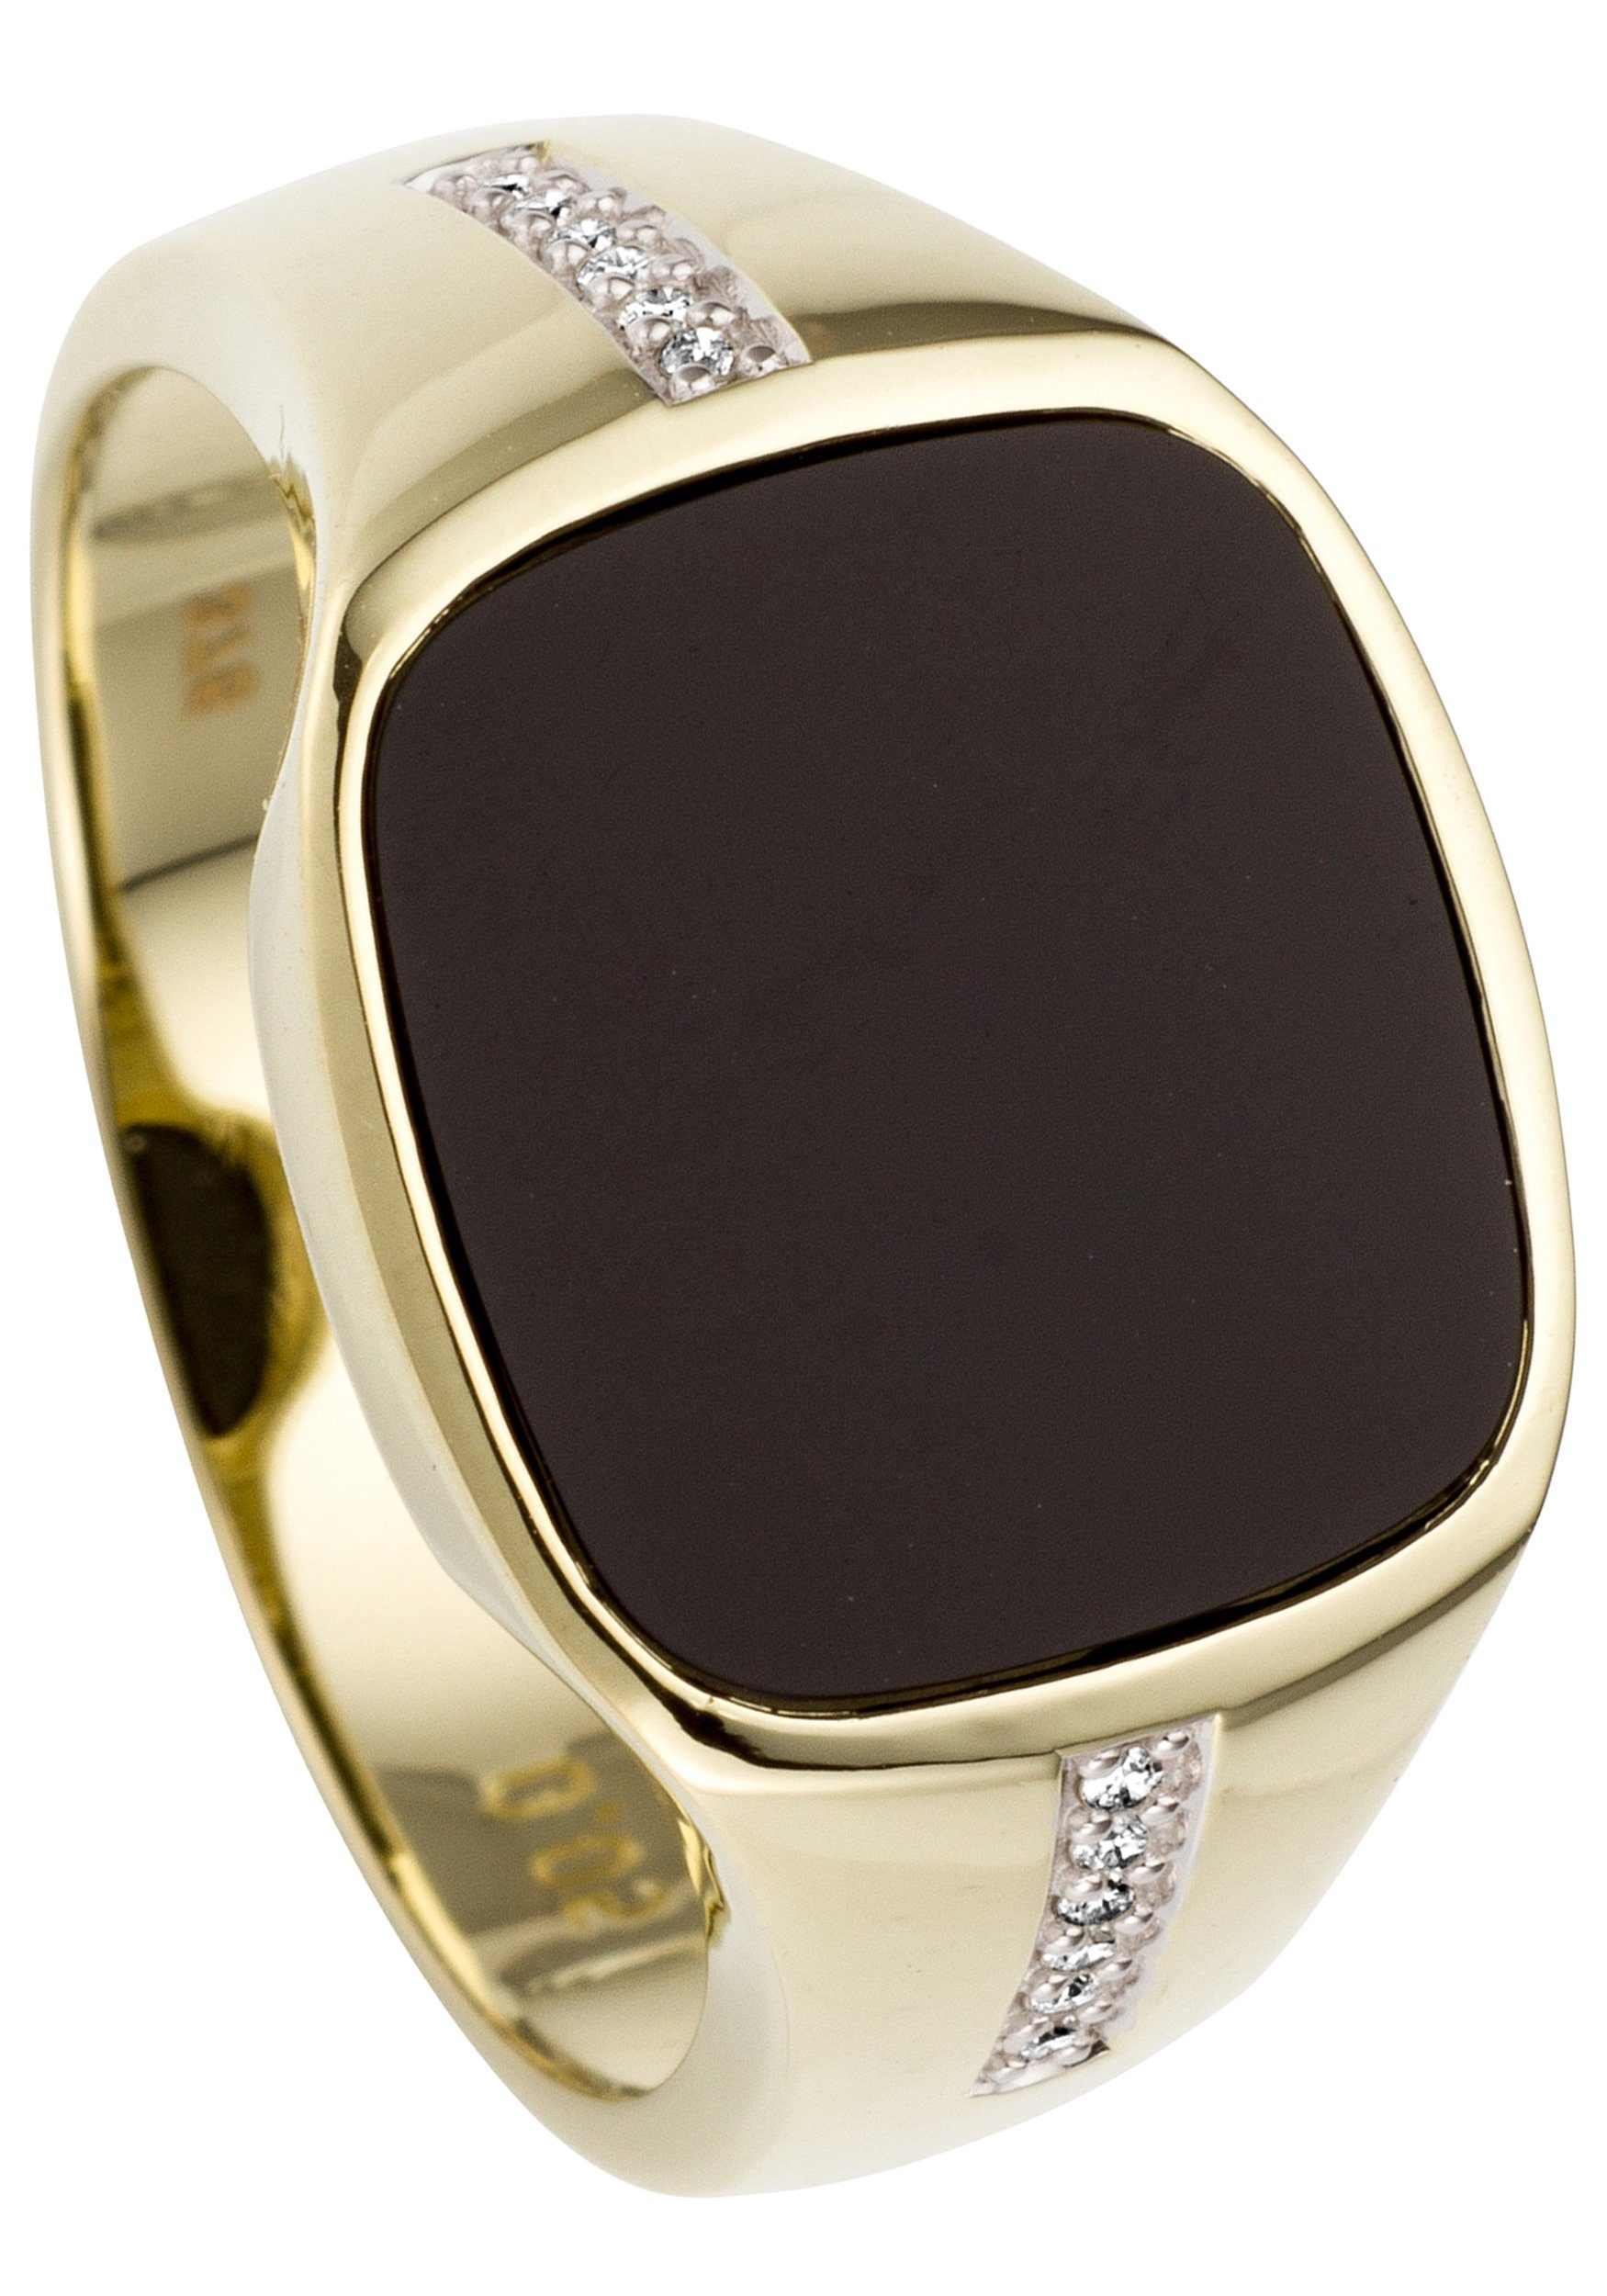 JOBO Fingerring Ring mit Onyx und 12 Diamanten, 585 Gold bicolor | Goldringe